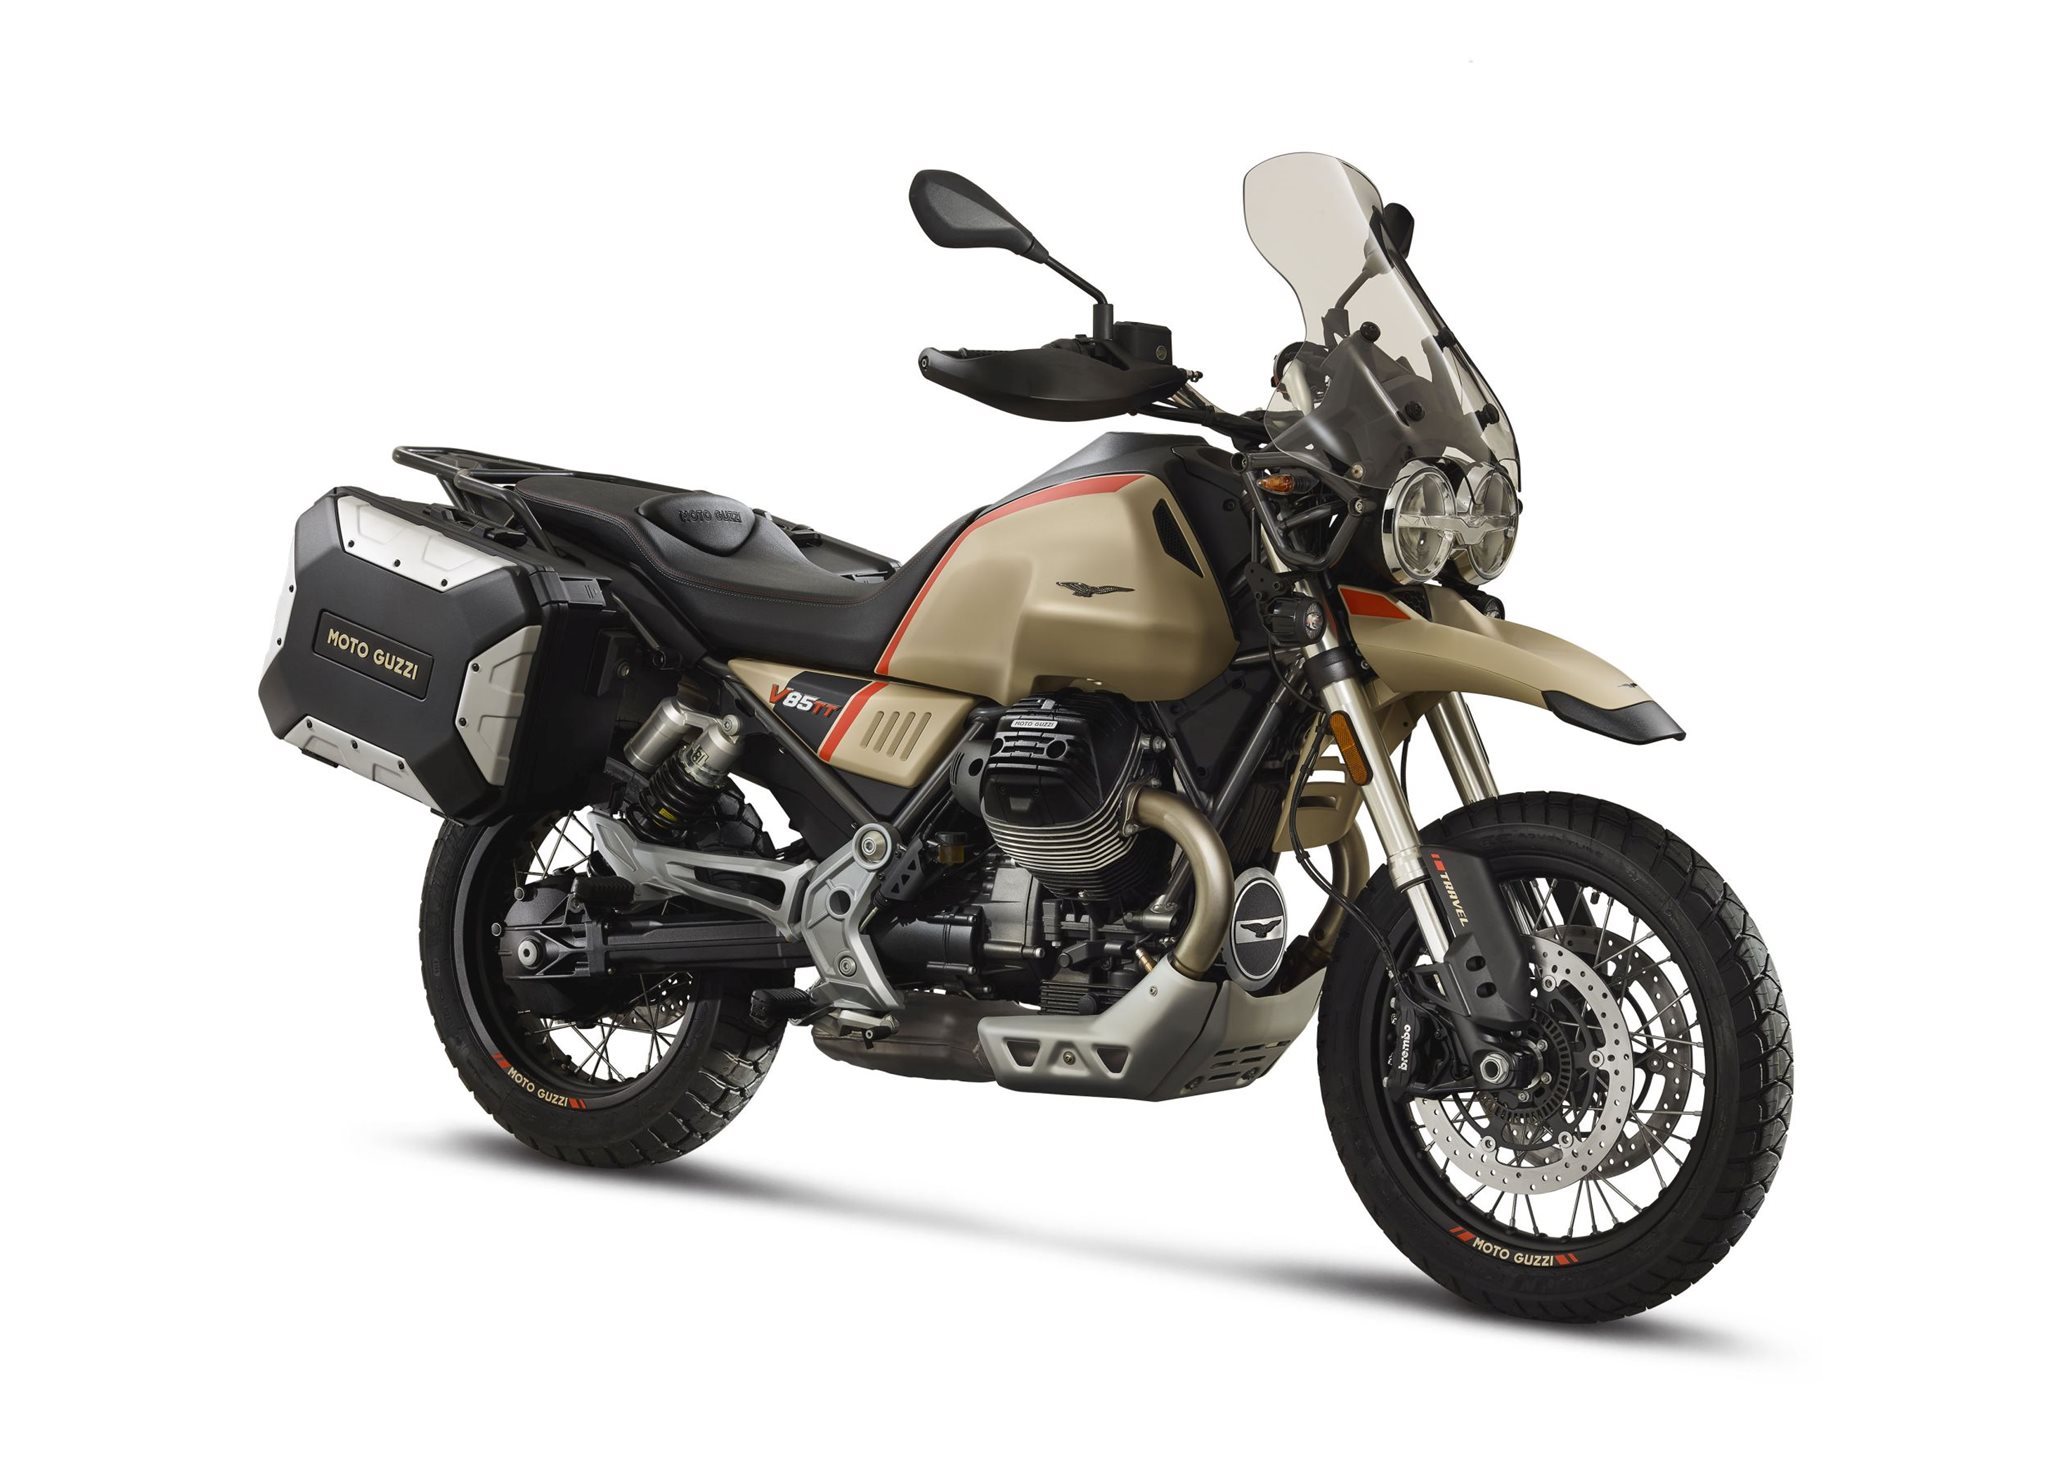 Featured image for “Moto Guzzi – V85 TT Travel”